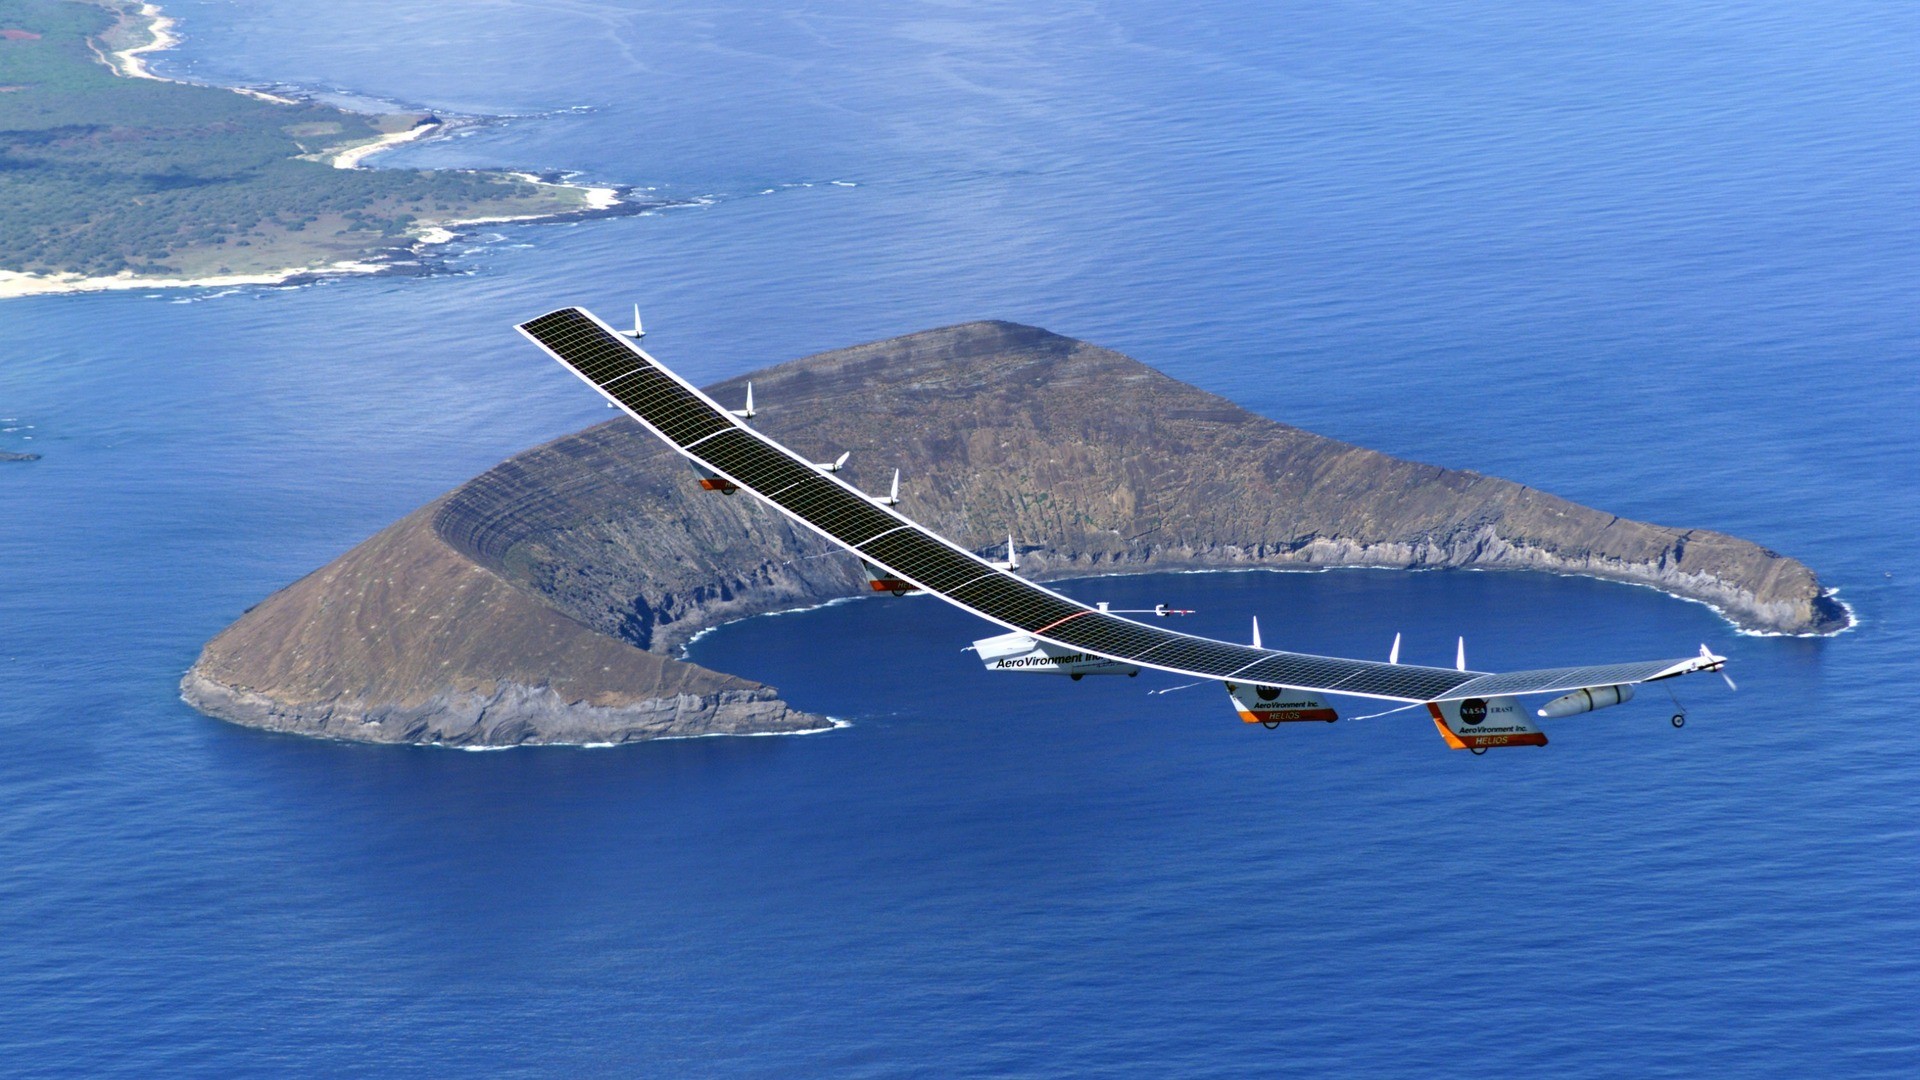 General 1920x1080 sea aerial view airplane island aircraft vehicle solar power